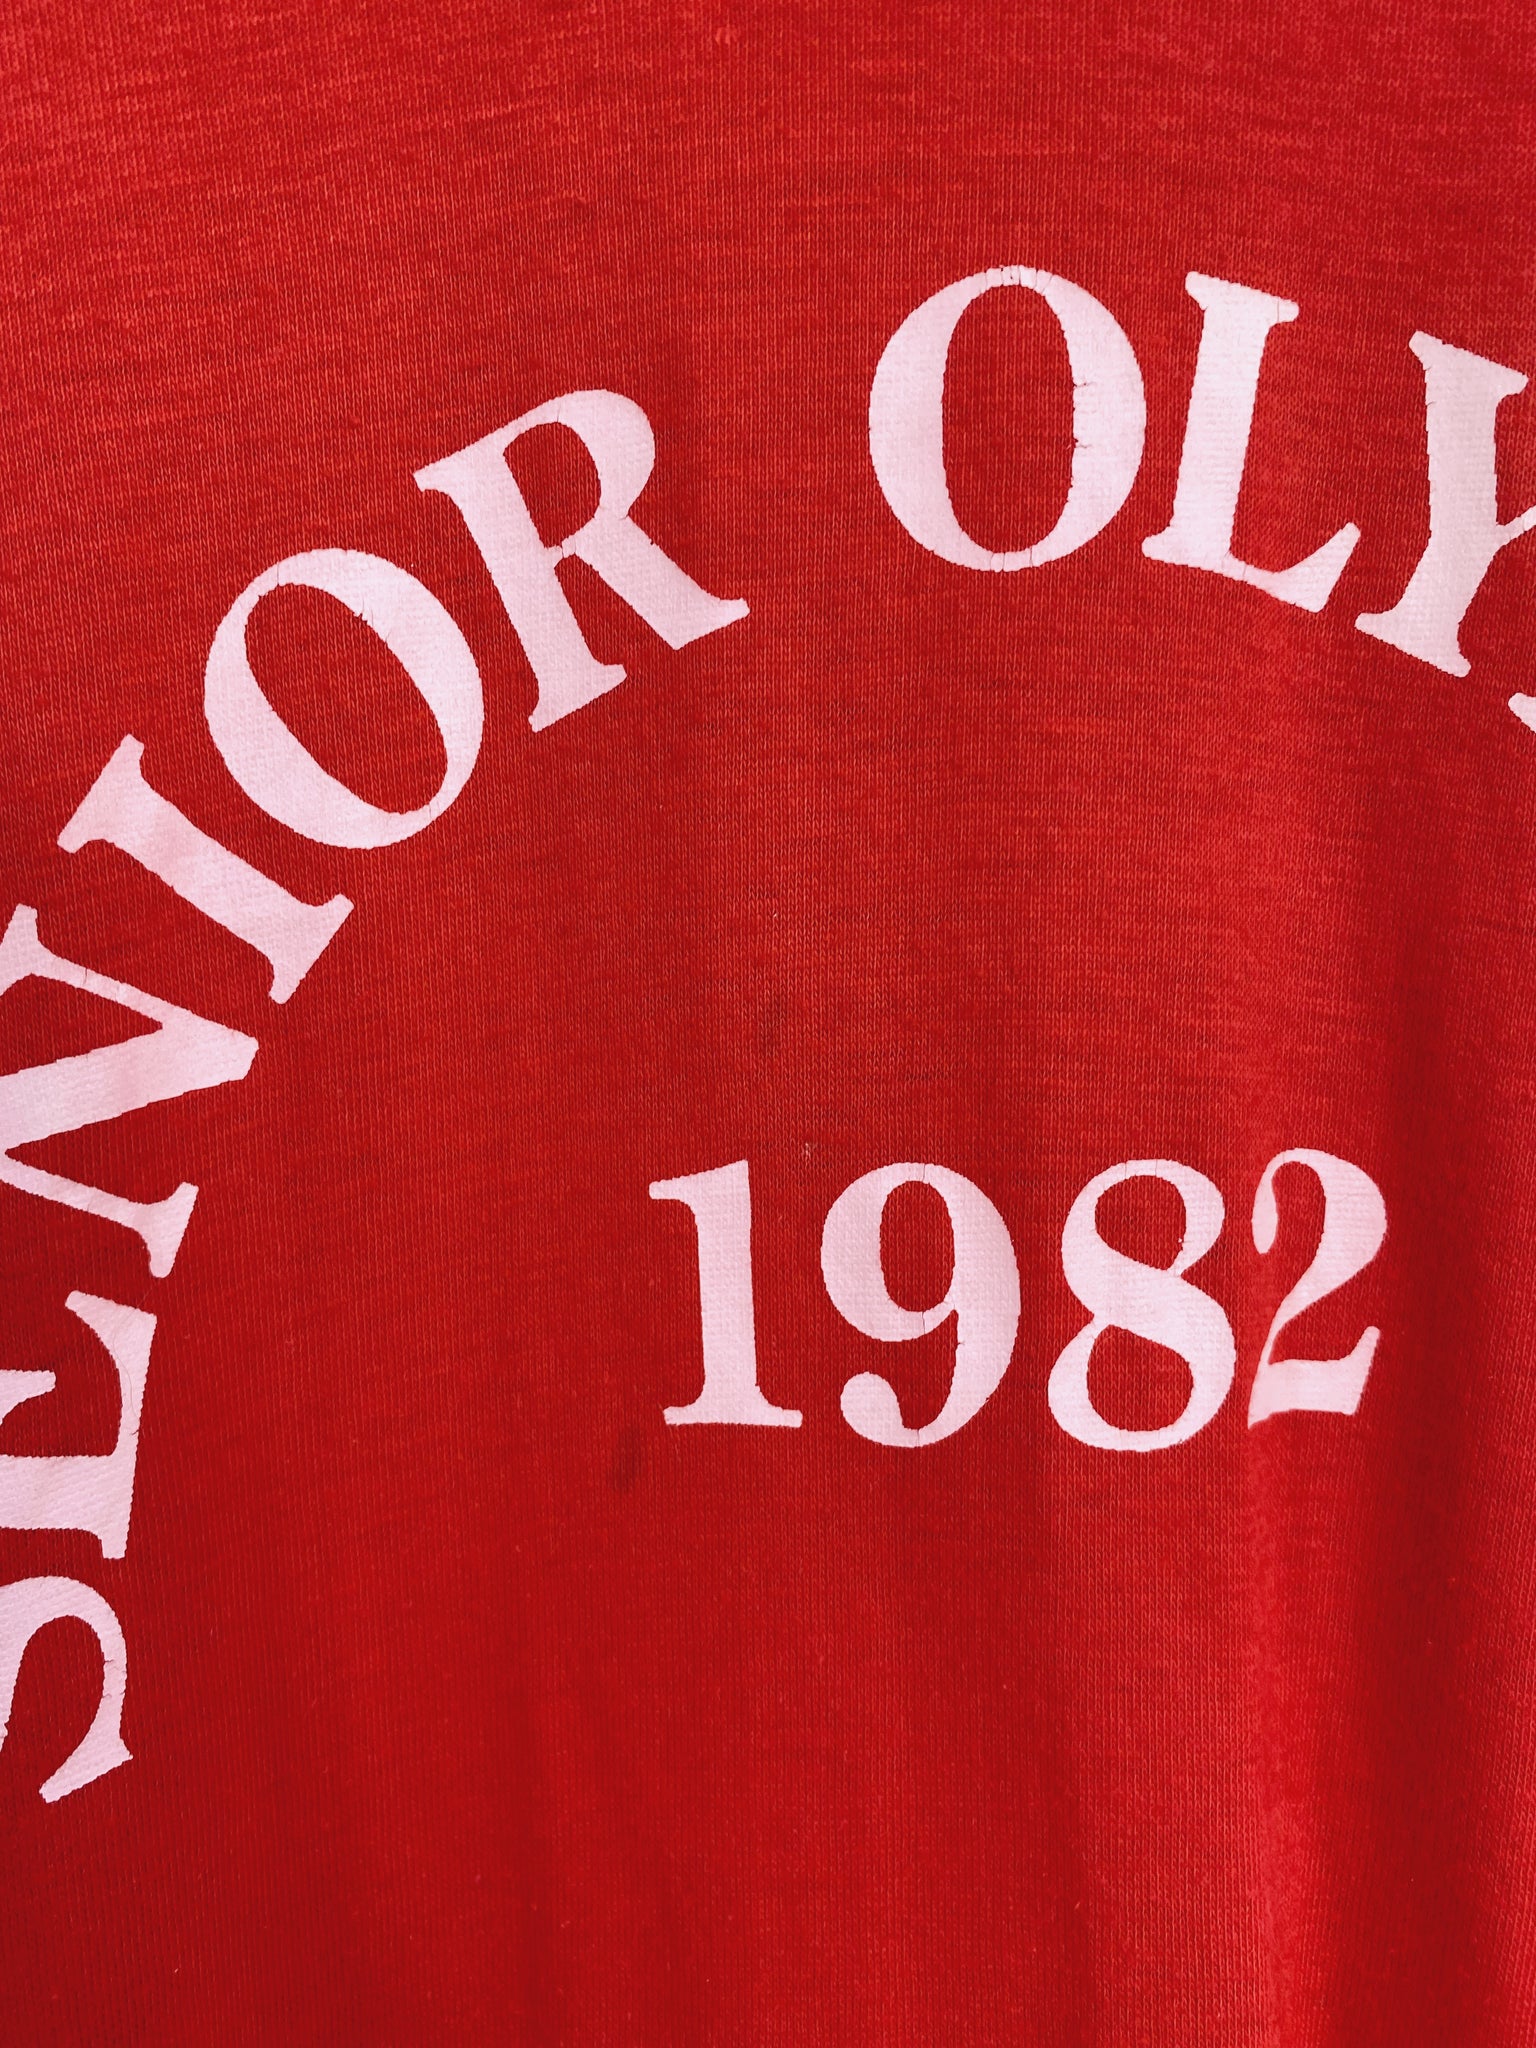 Vintage 1982 Senior Olympics T-shirt M